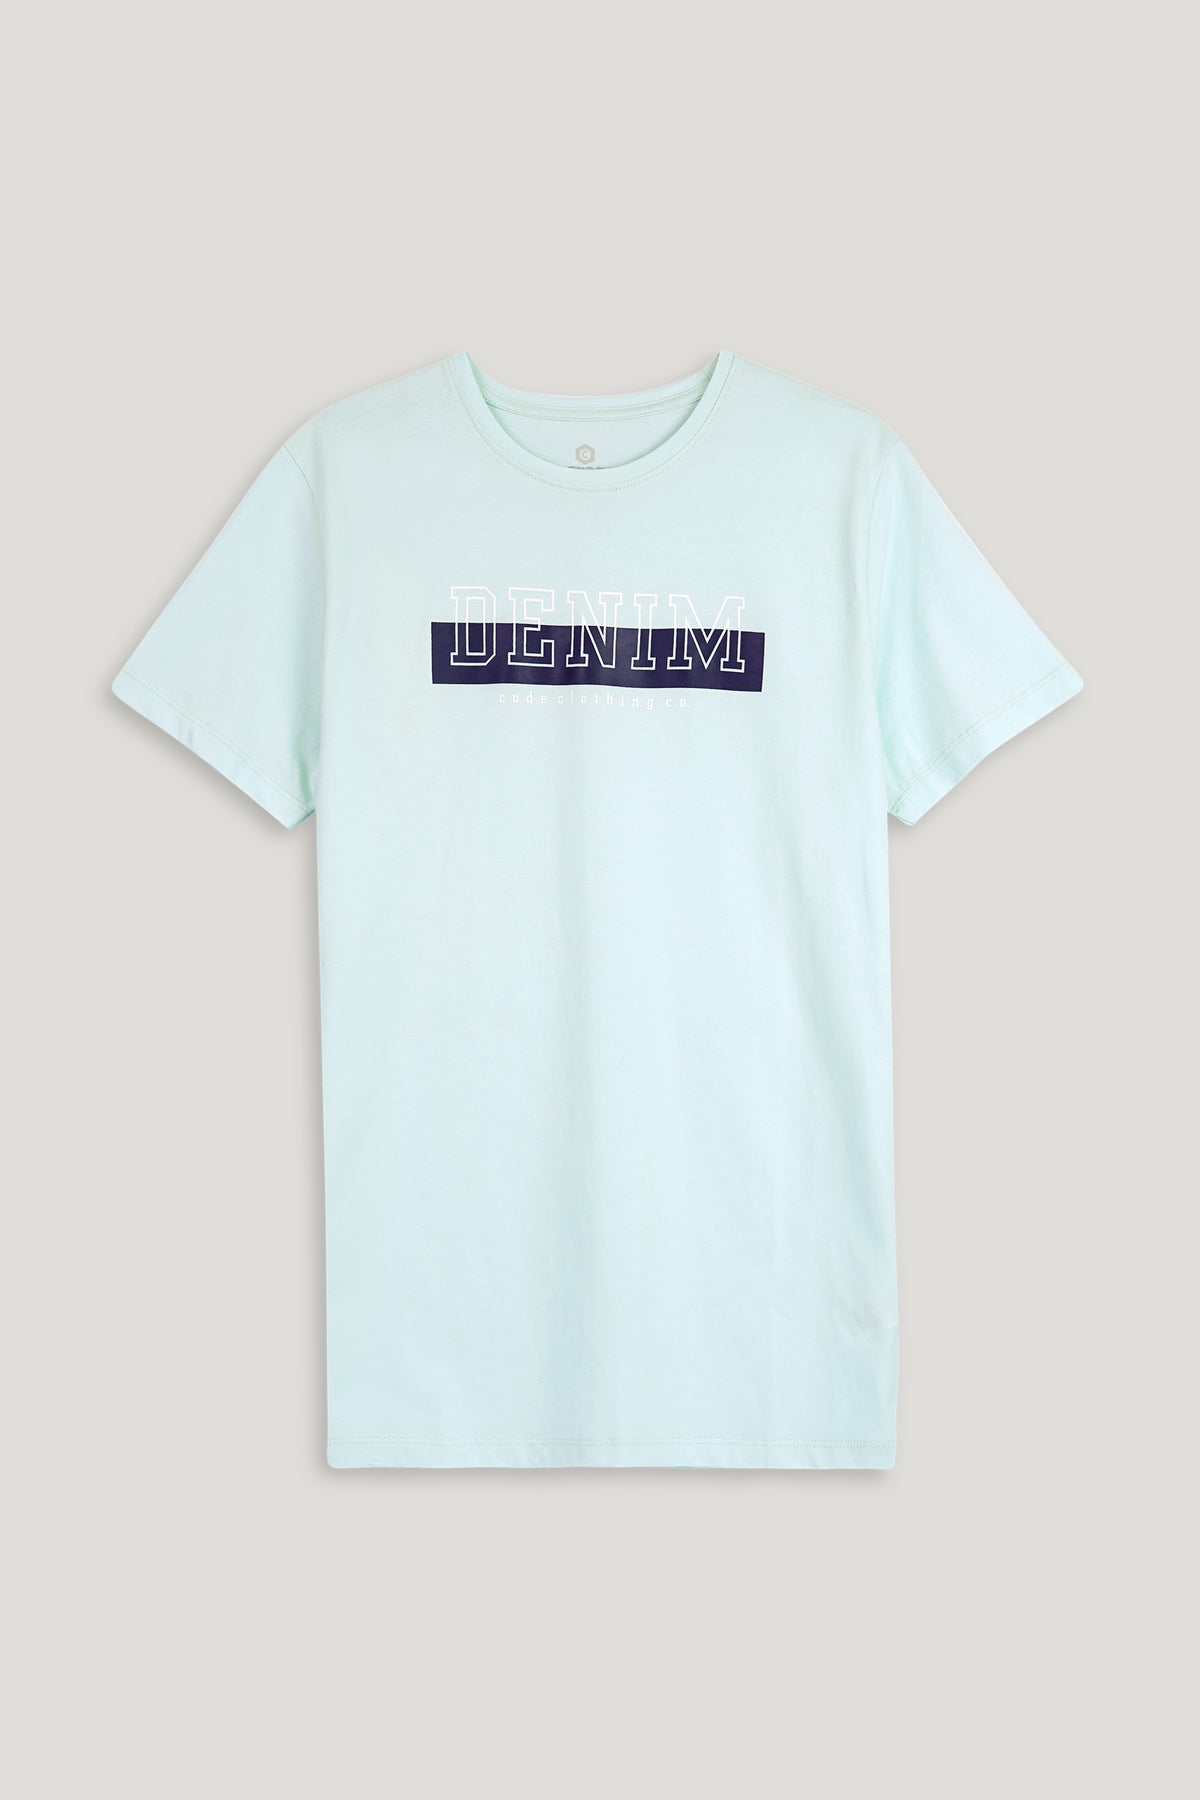 Sky Blue Graphic Printed T-Shirt